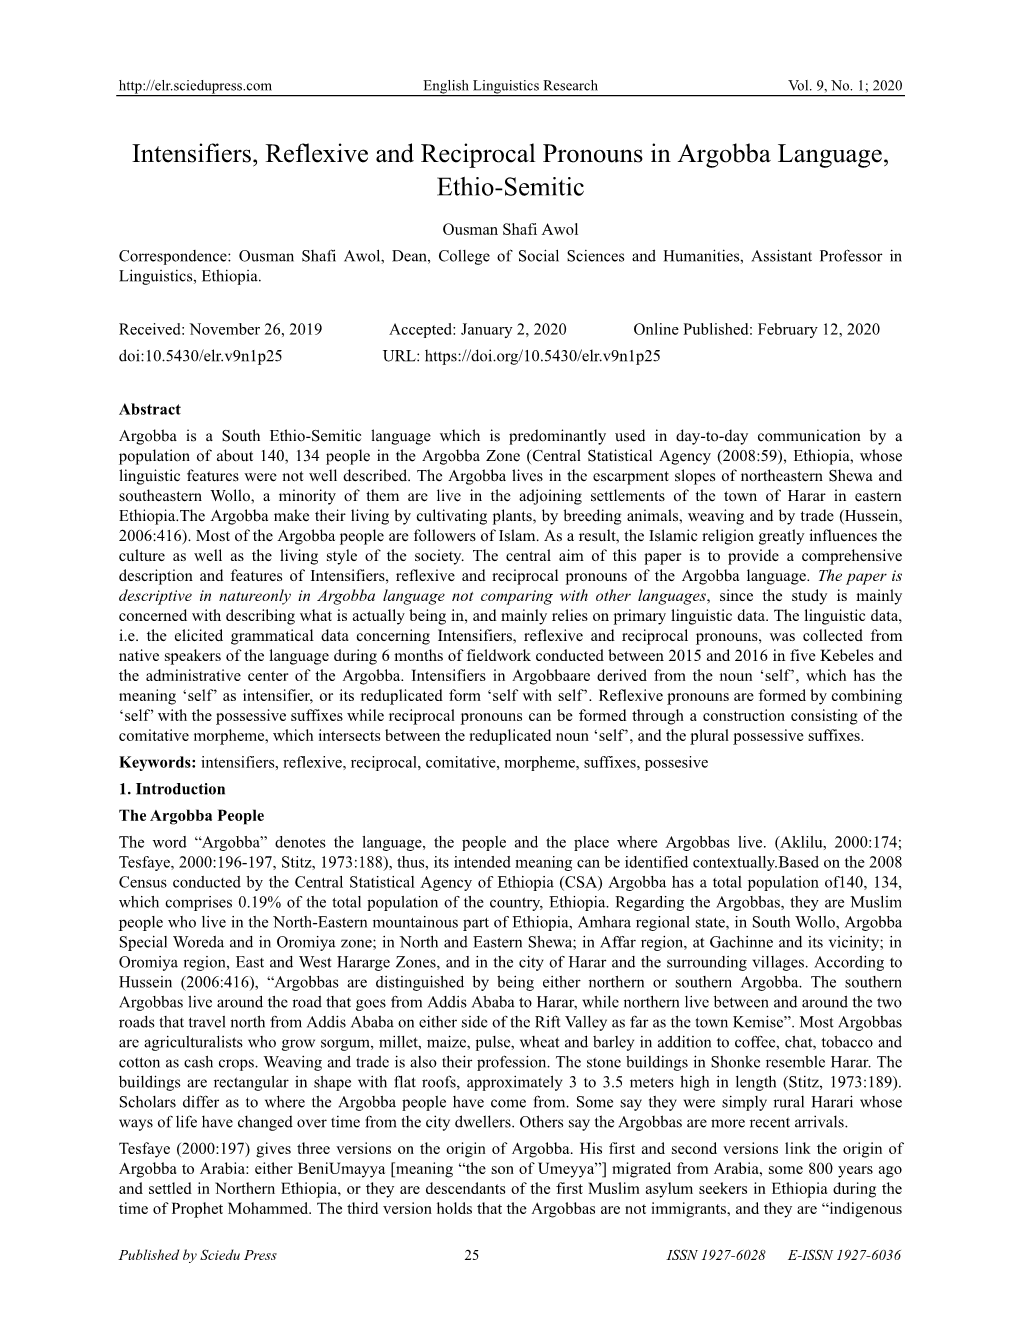 Intensifiers, Reflexive and Reciprocal Pronouns in Argobba Language, Ethio-Semitic